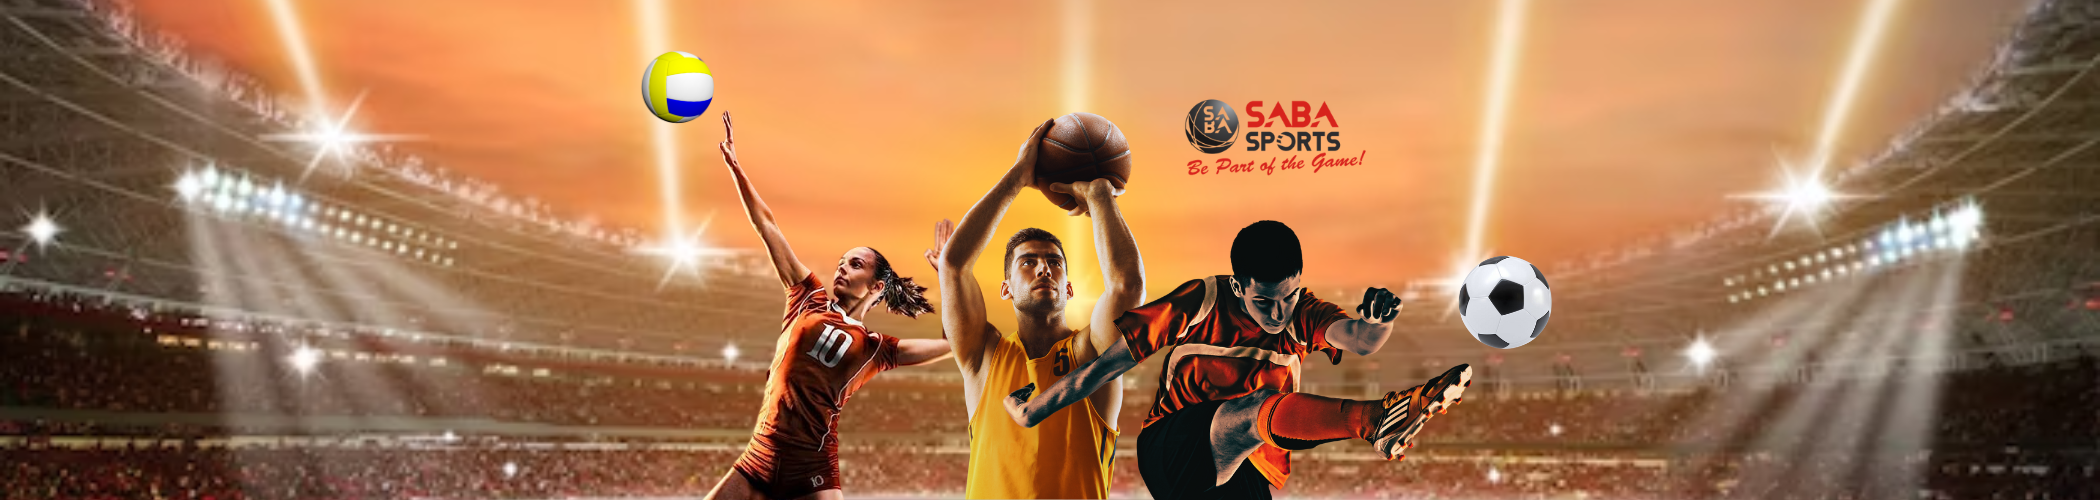 Nova88 Sportsbook Banner SABA Sportsbook Saba Sports